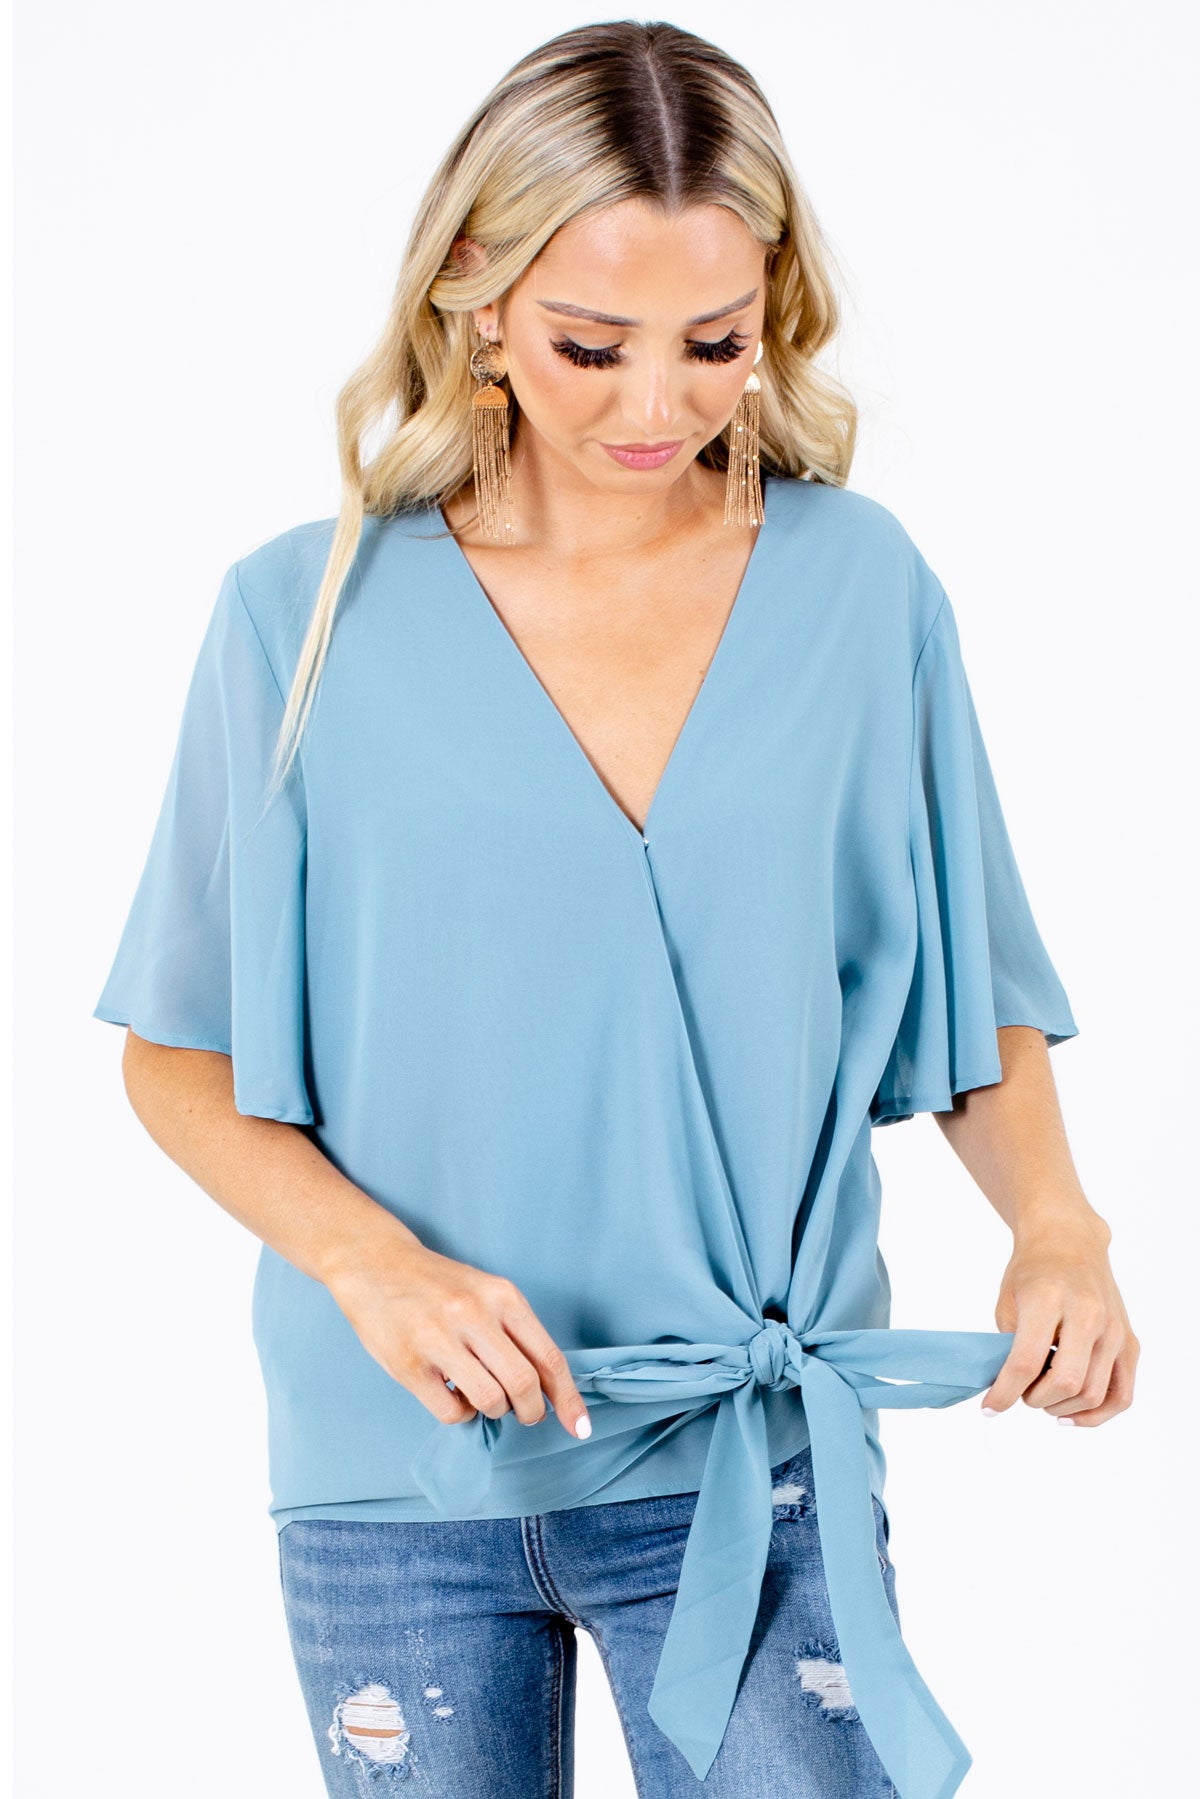 Blue Flutter Sleeve Boutique Blouses for Women